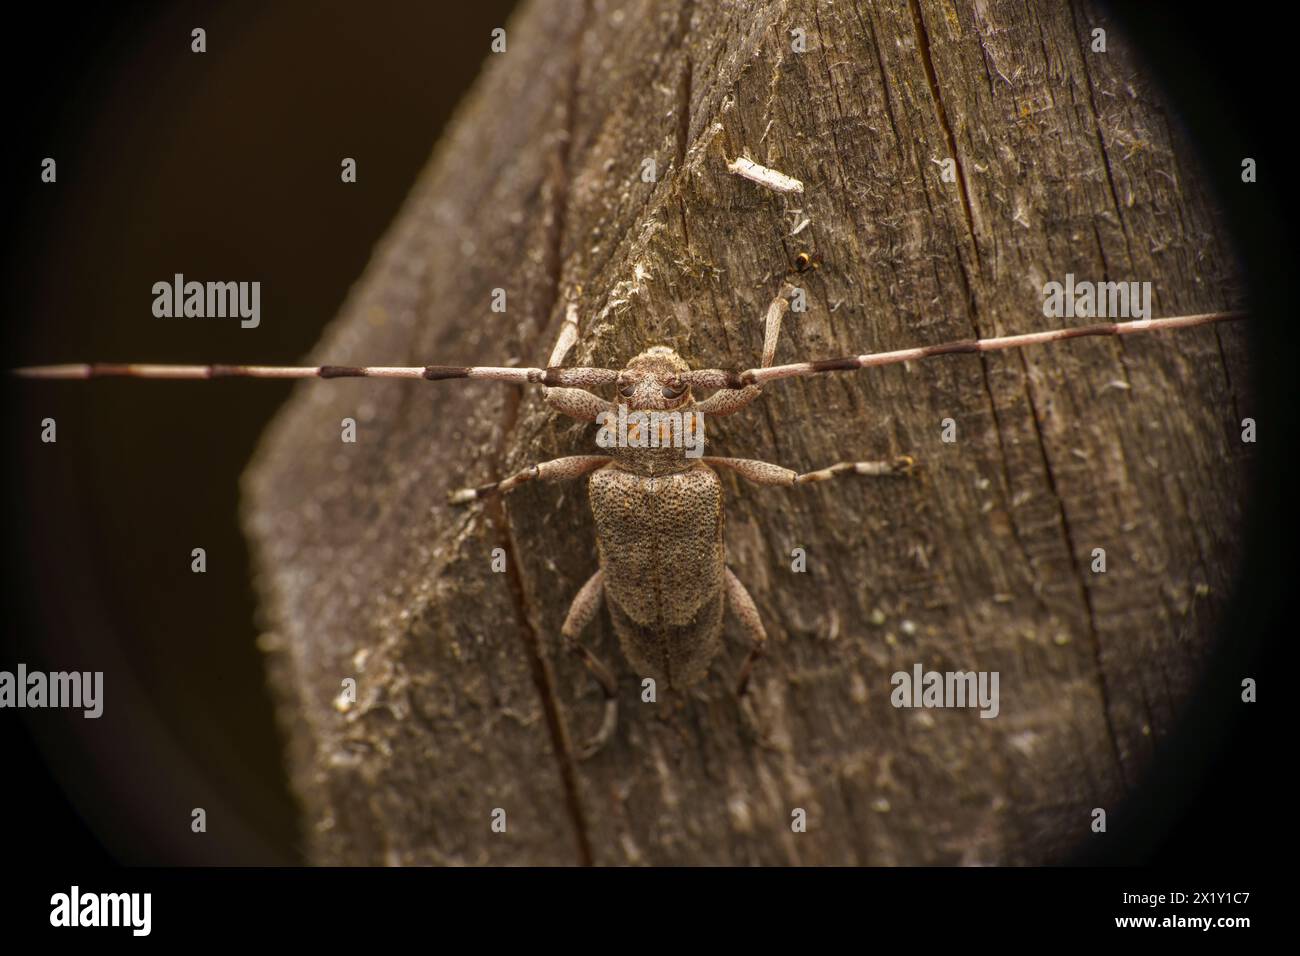 Acanthocinus aedilis Family Cerambycidae Genus Acanthocinus Timberman beetle Woodboring beetle Longhorn beetle wild nature insect photography, picture Stock Photo